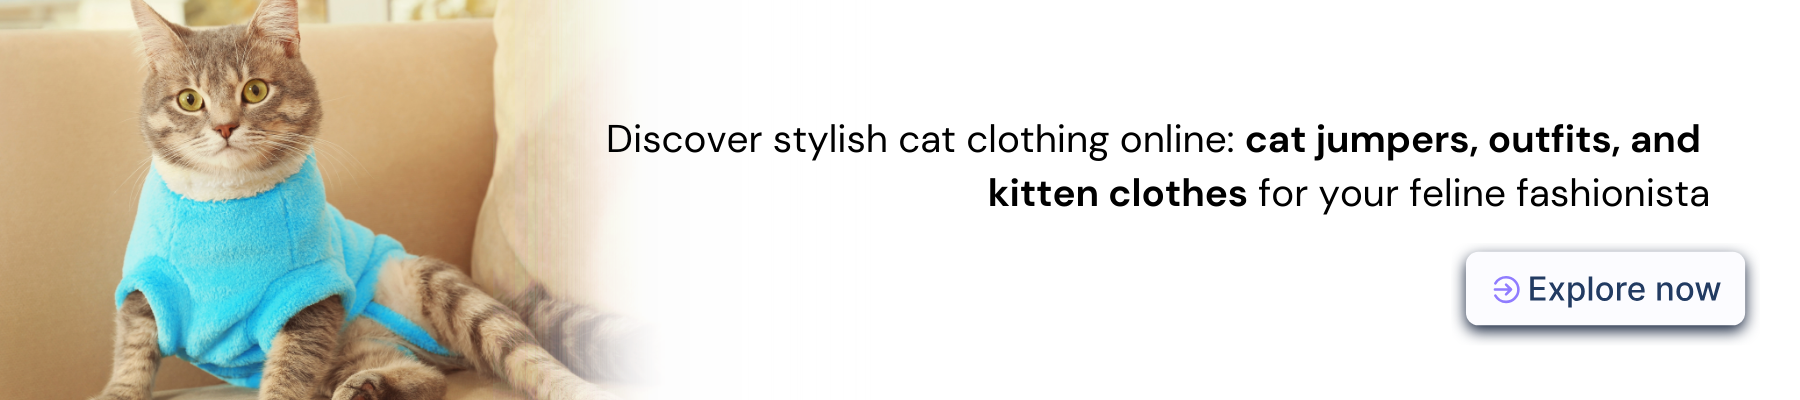 buy cat clothing online in Australia